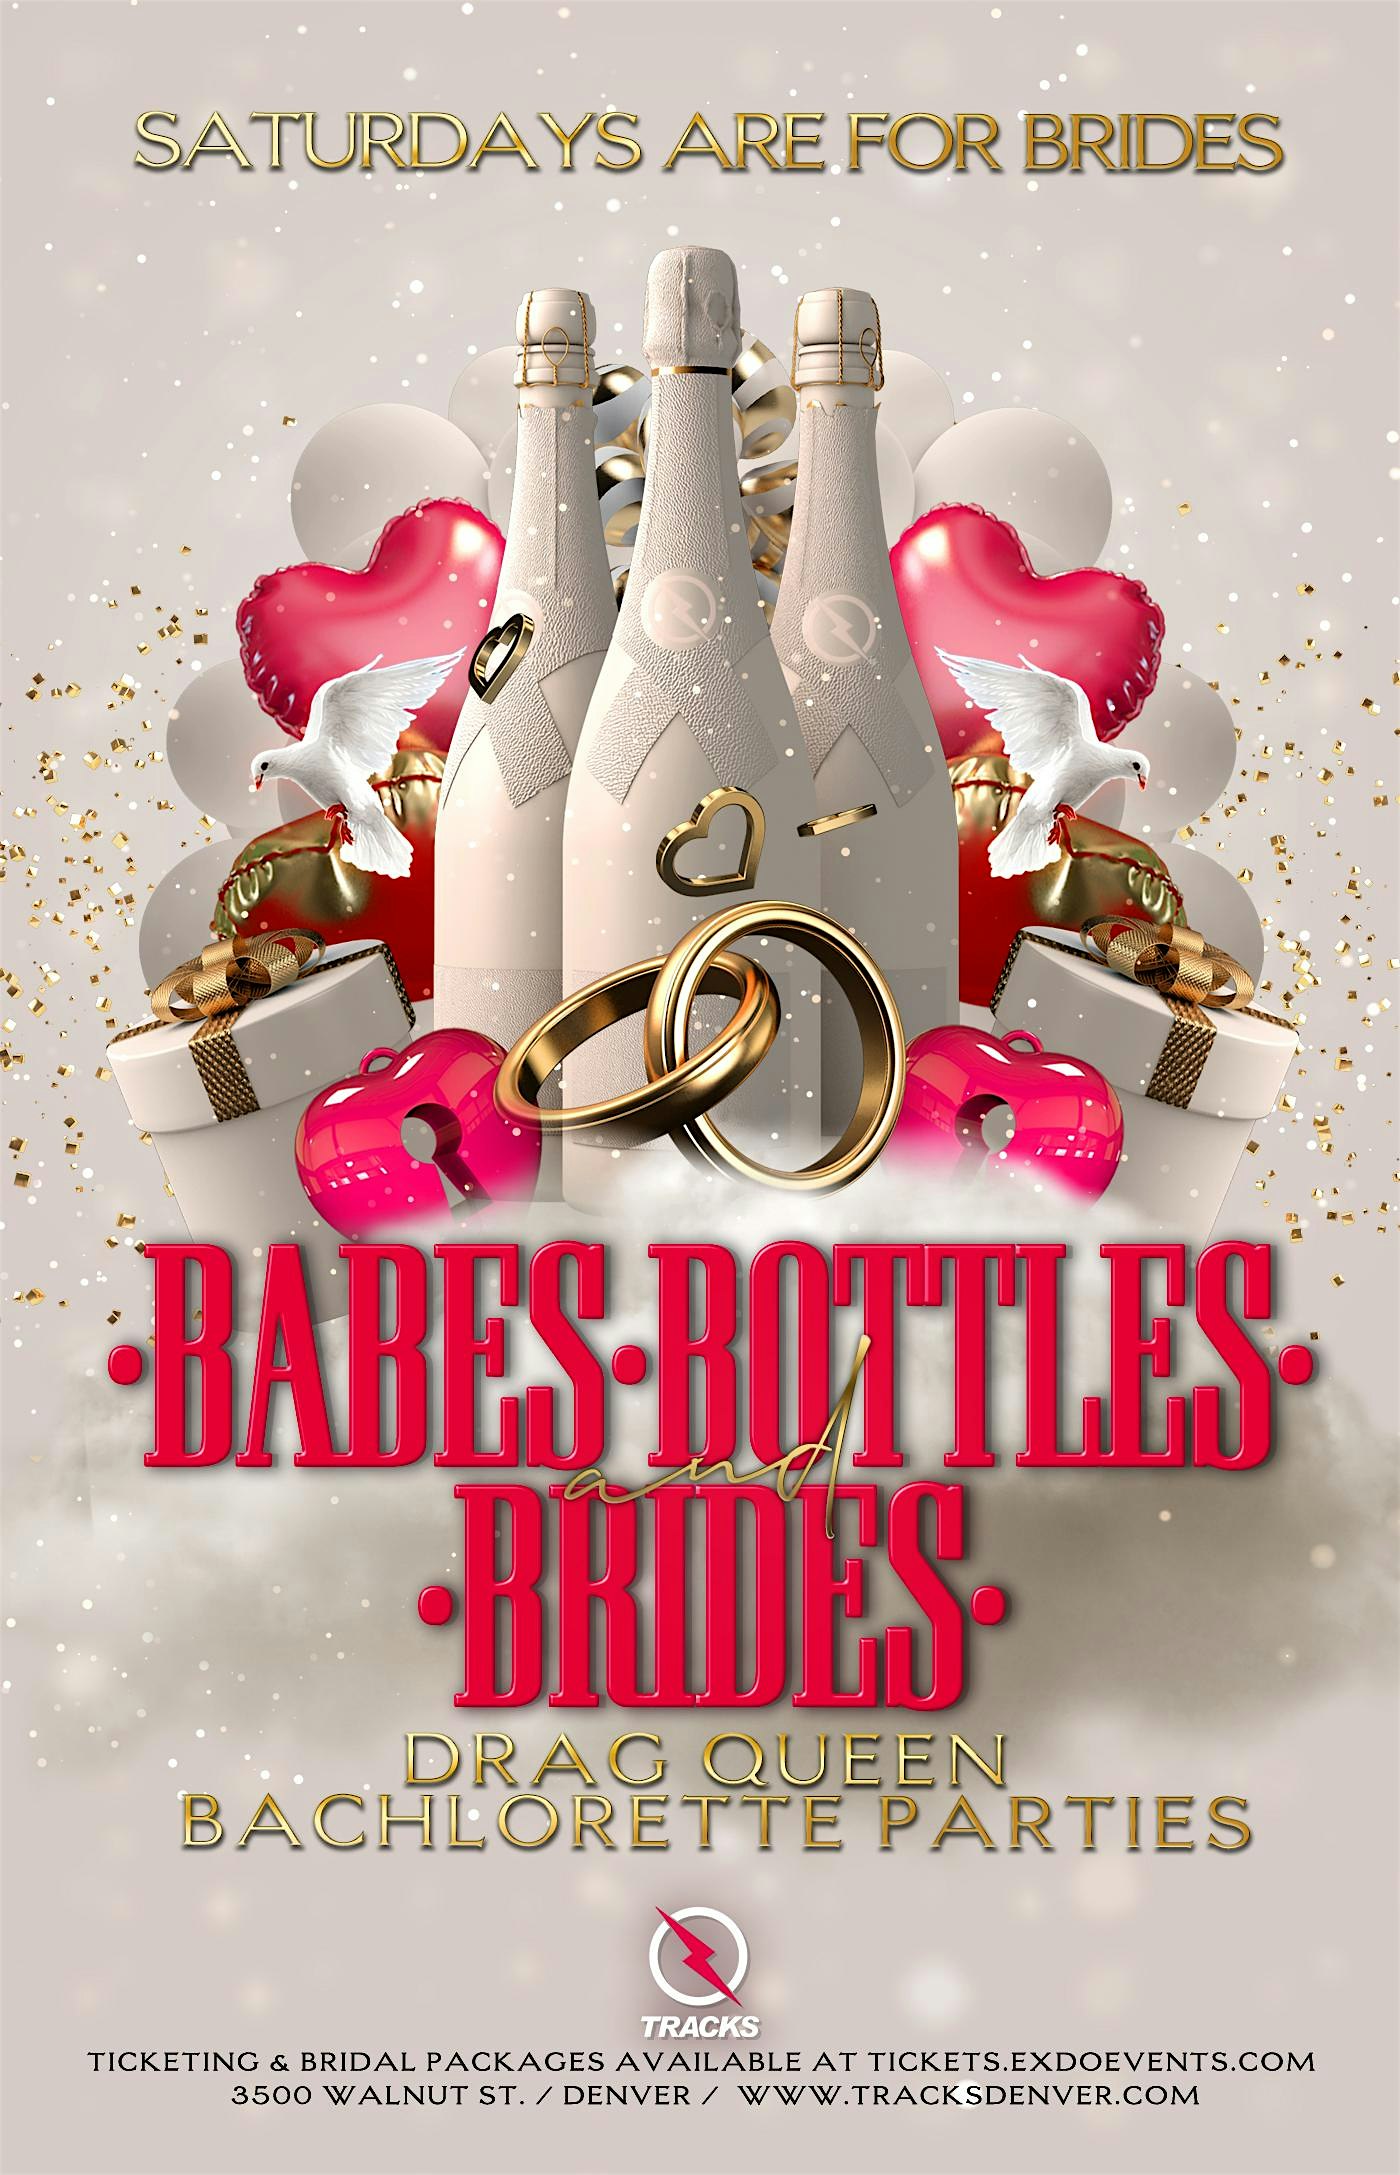 Babes, Bottles, Brides